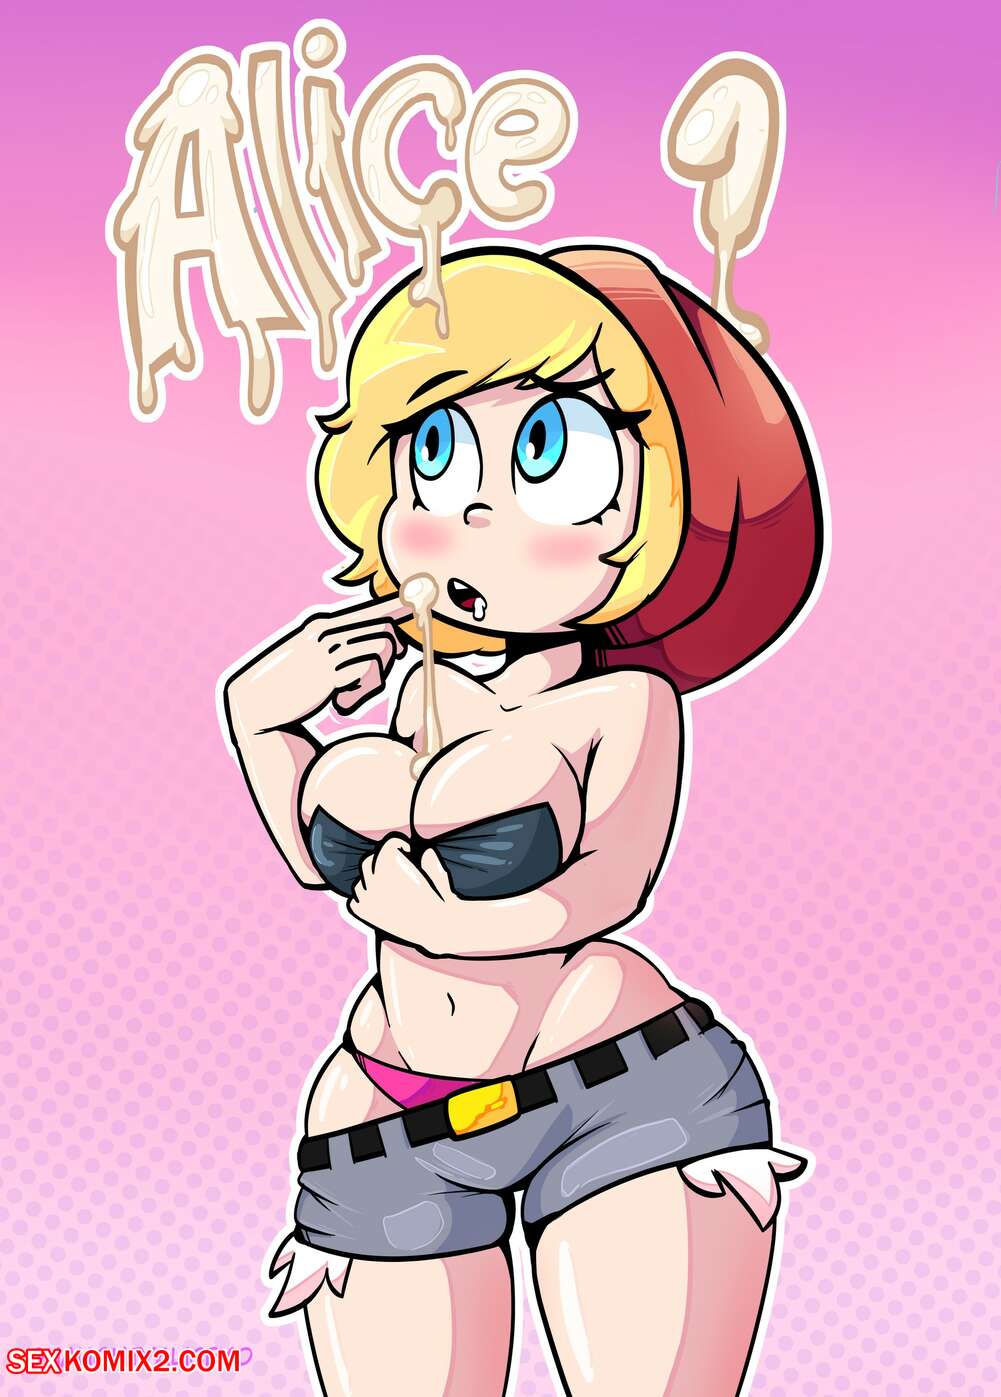 Alice Anime Porn - âœ…ï¸ Porn comic Alice 1. NaughtyAlicexo Sex comic busty blonde went | Porn  comics in English for adults only | sexkomix2.com